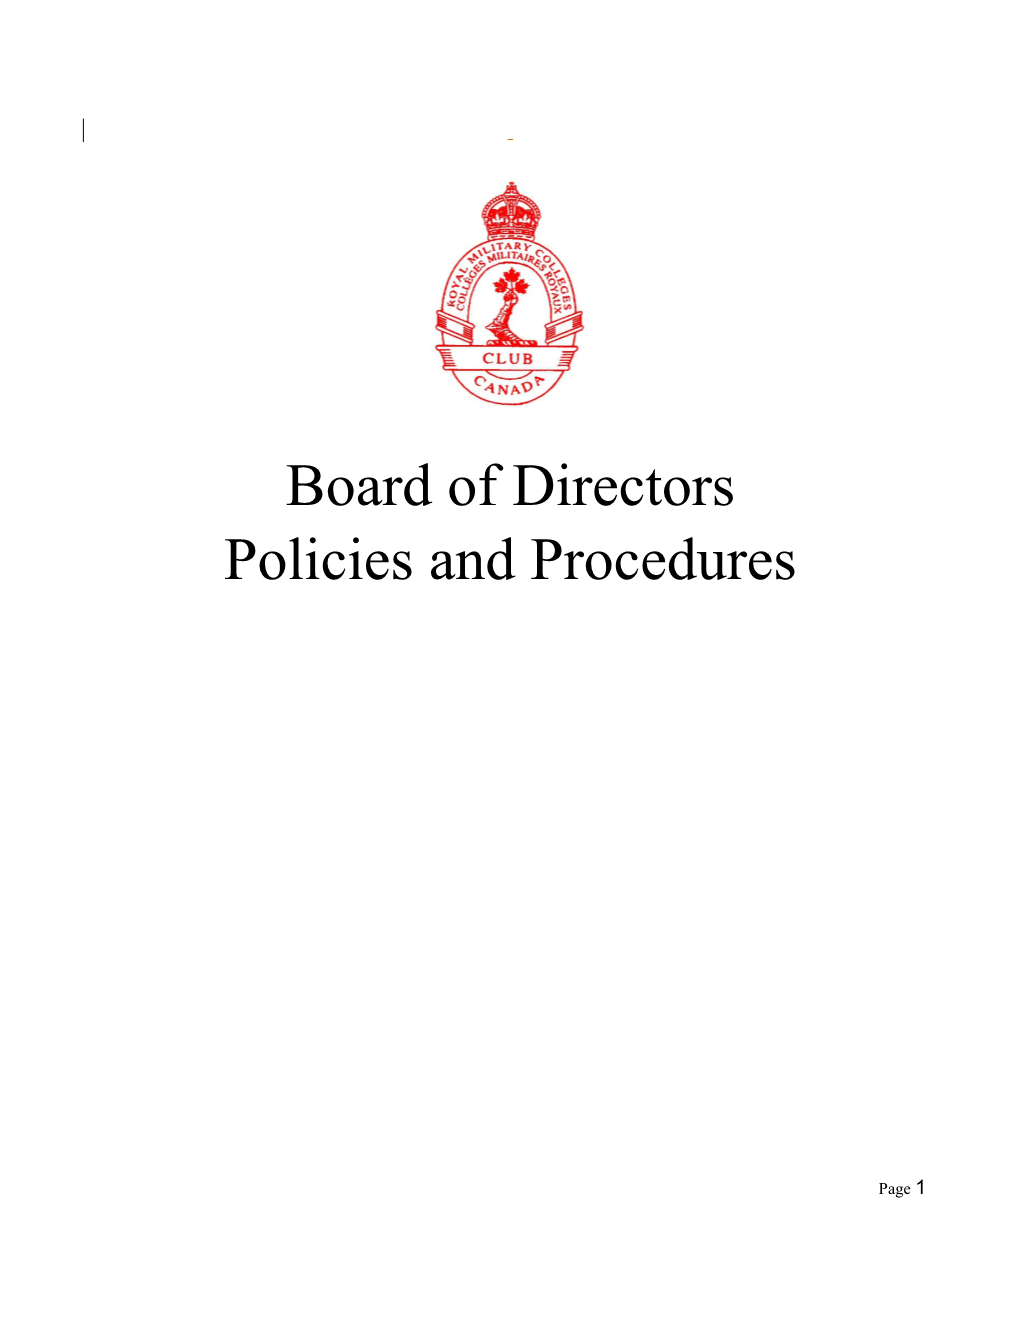 Sample Board Policies